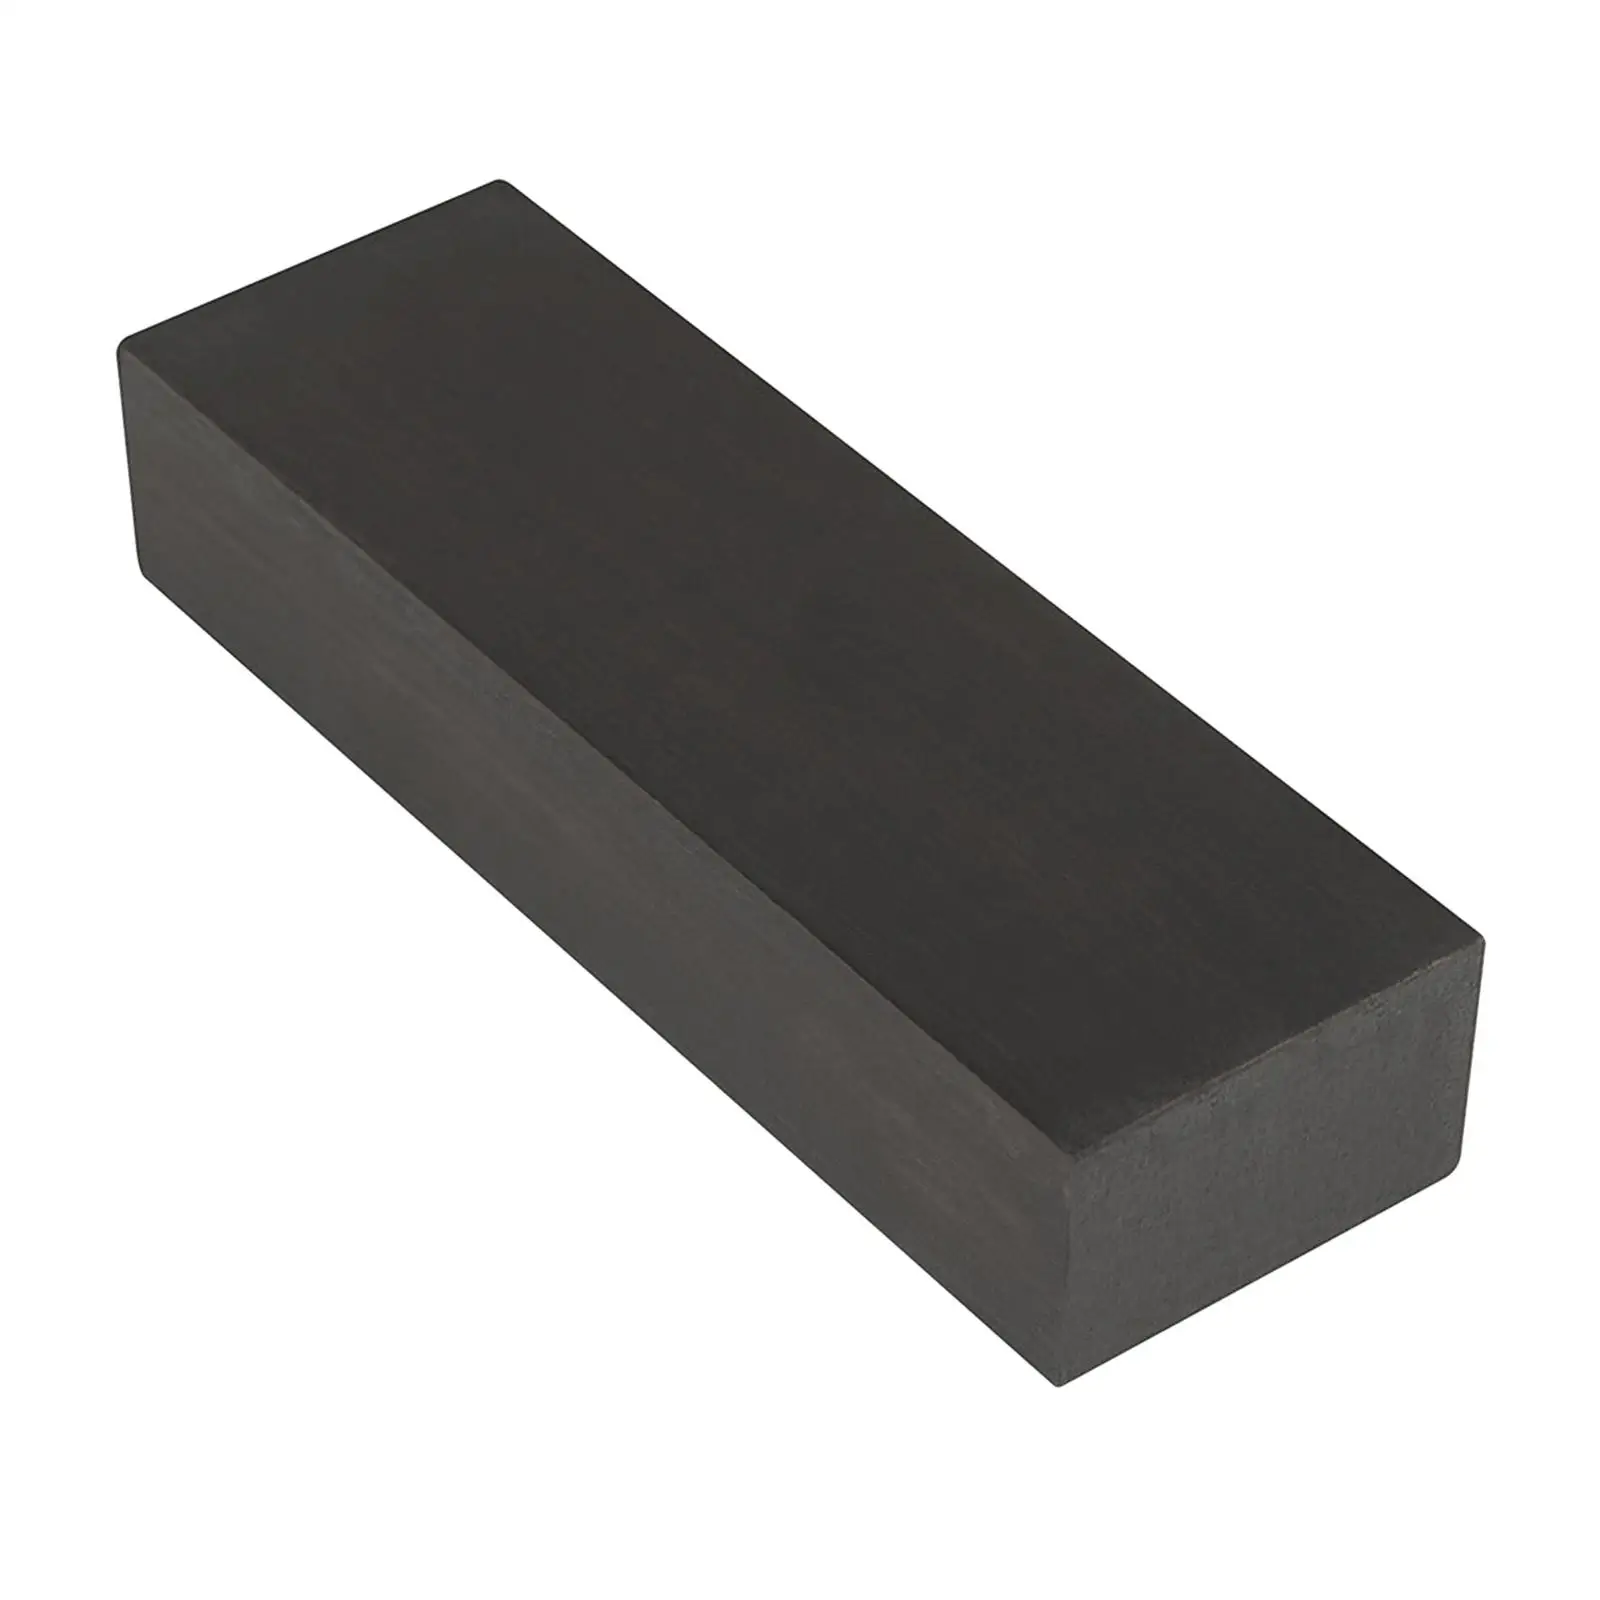 1 Piece Black Ebony Wood Lumber Blank DIY Material for Music Instrument 2 x 1/2 x 5 